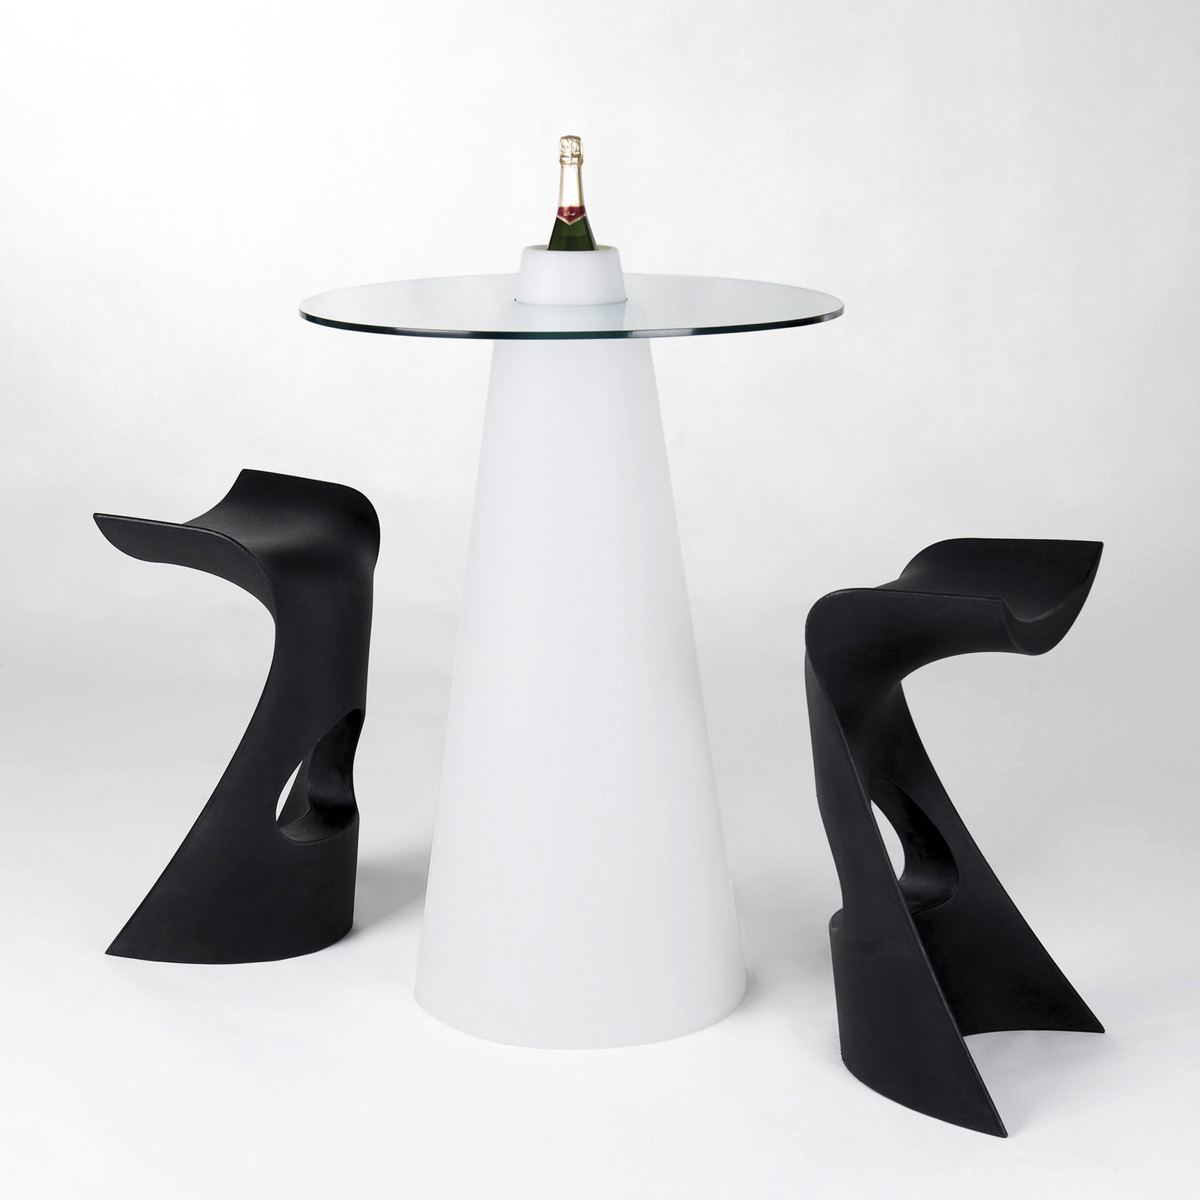 Koncord stool from Slide